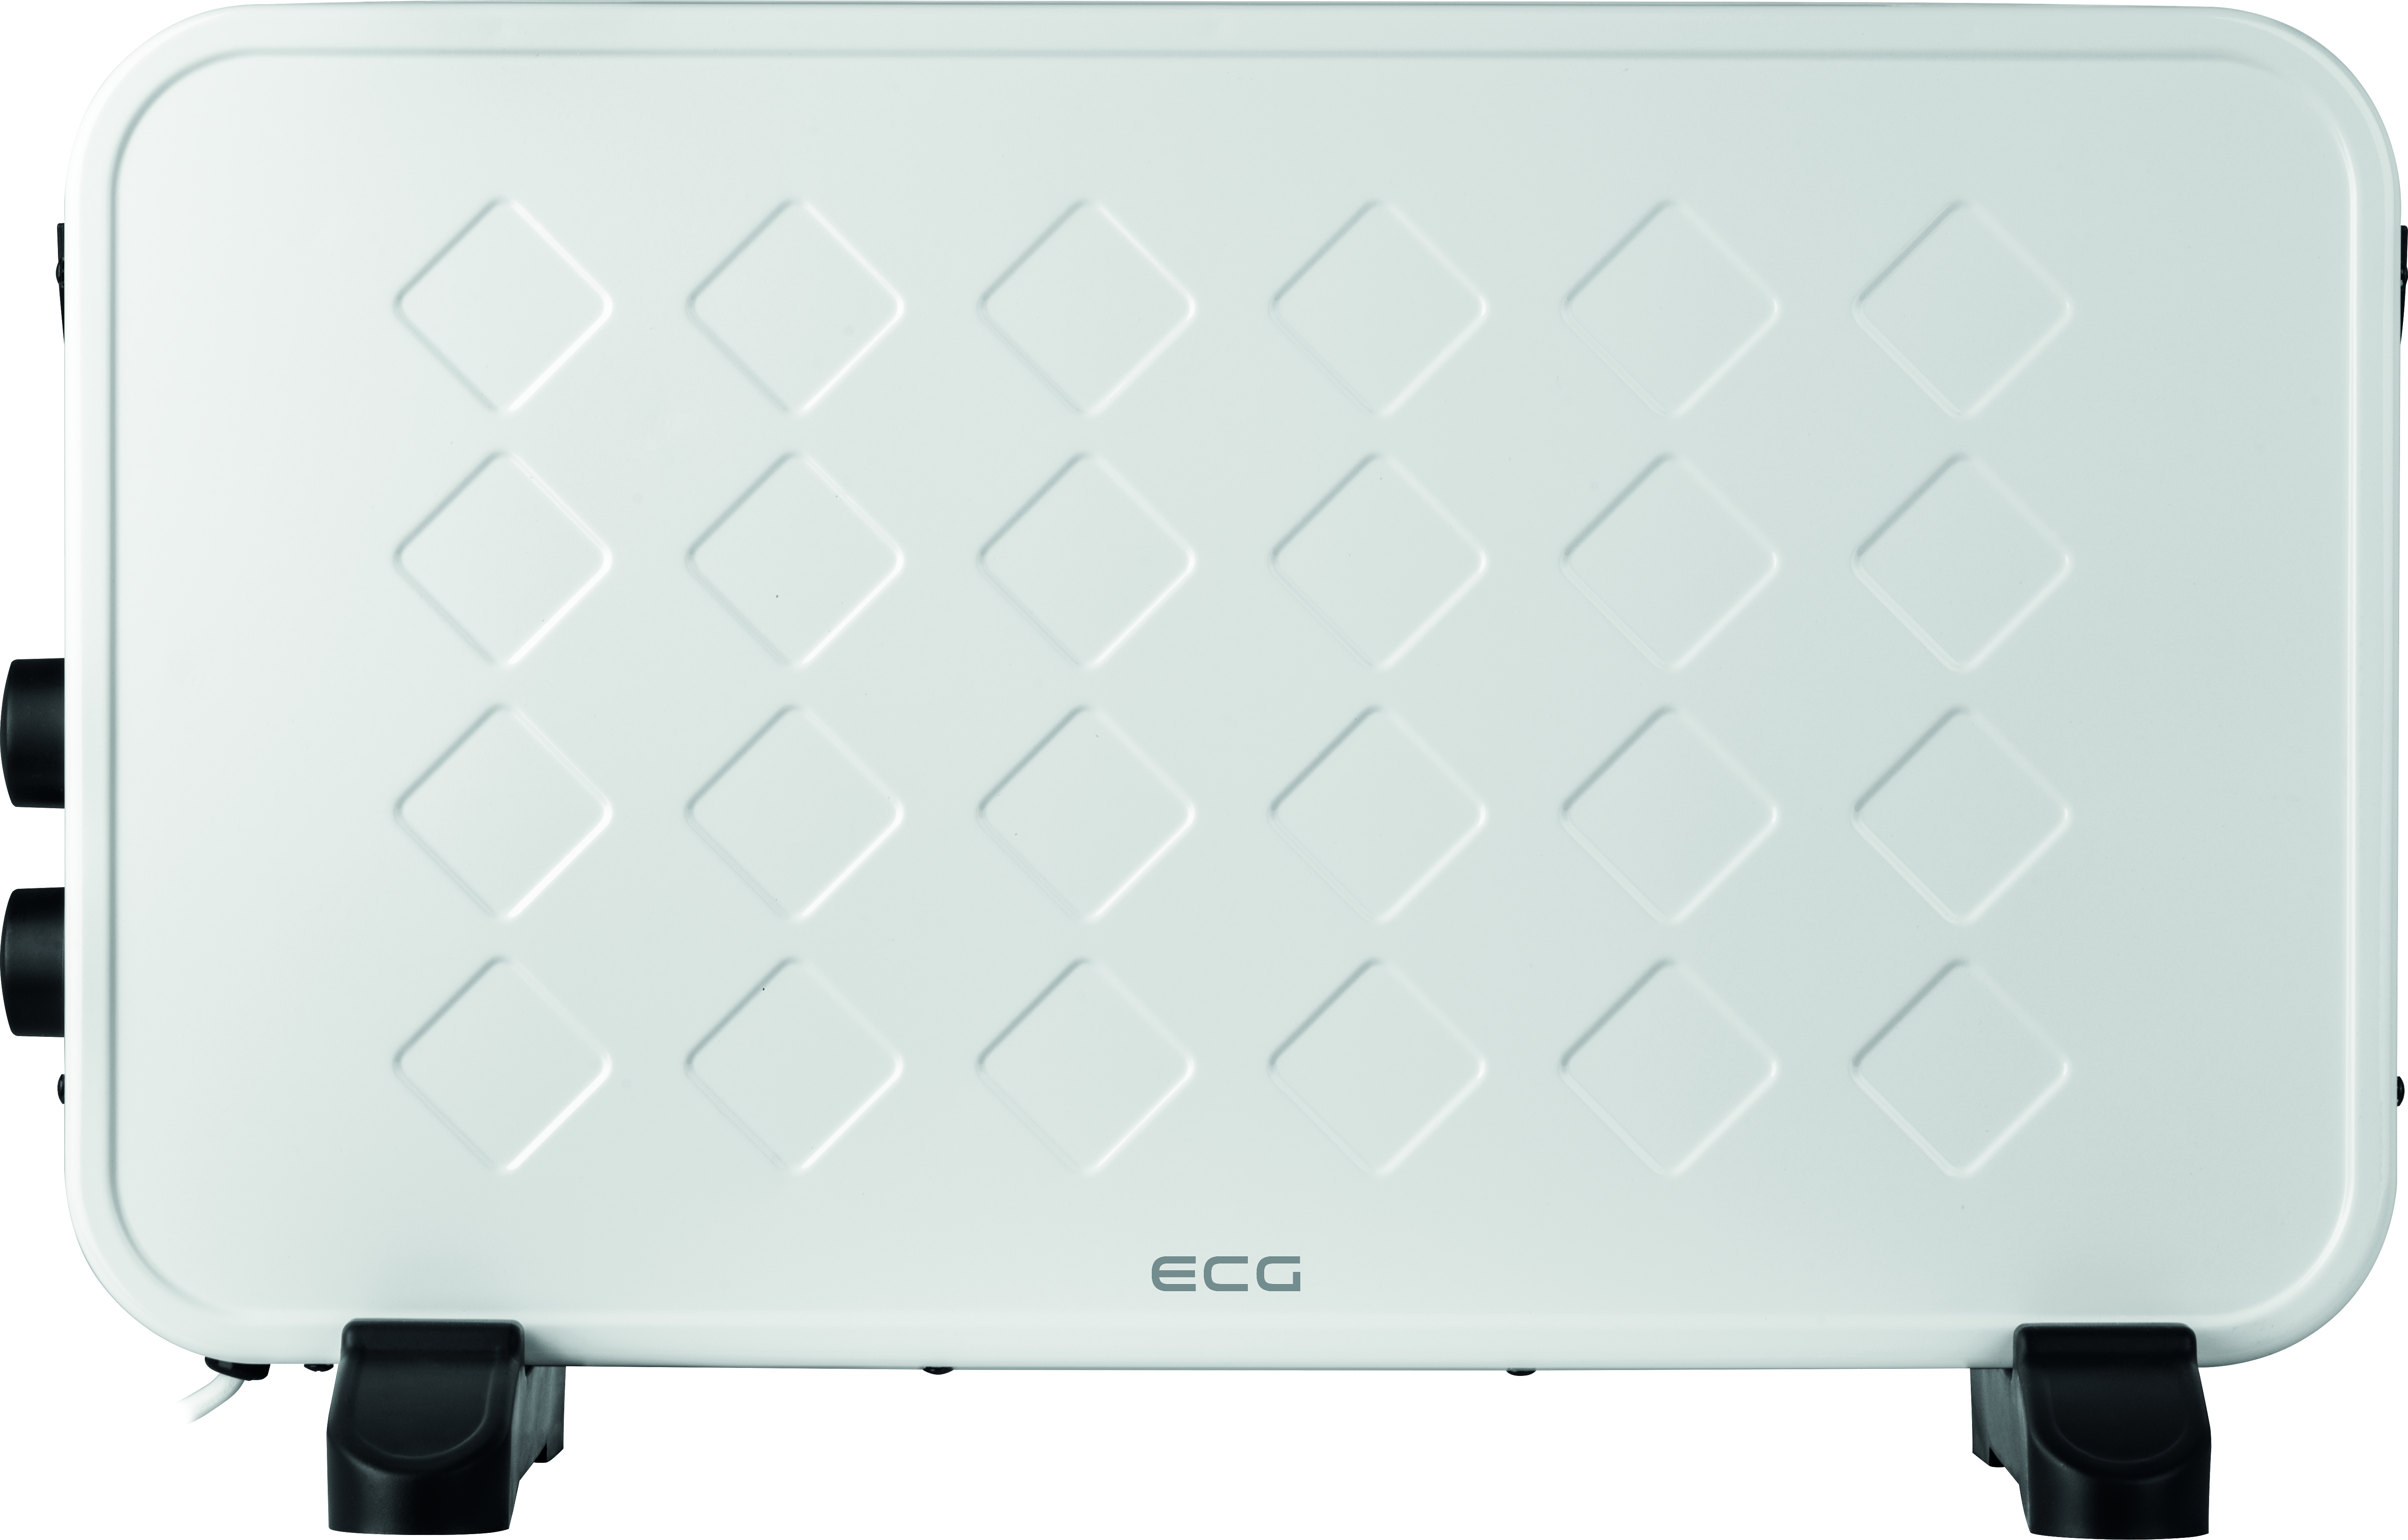 | Konvektorheizgerät White | 2070 Watt) | Convectors | Stufenlose ECG Heizung Thermostat-Regelung (2000 TK